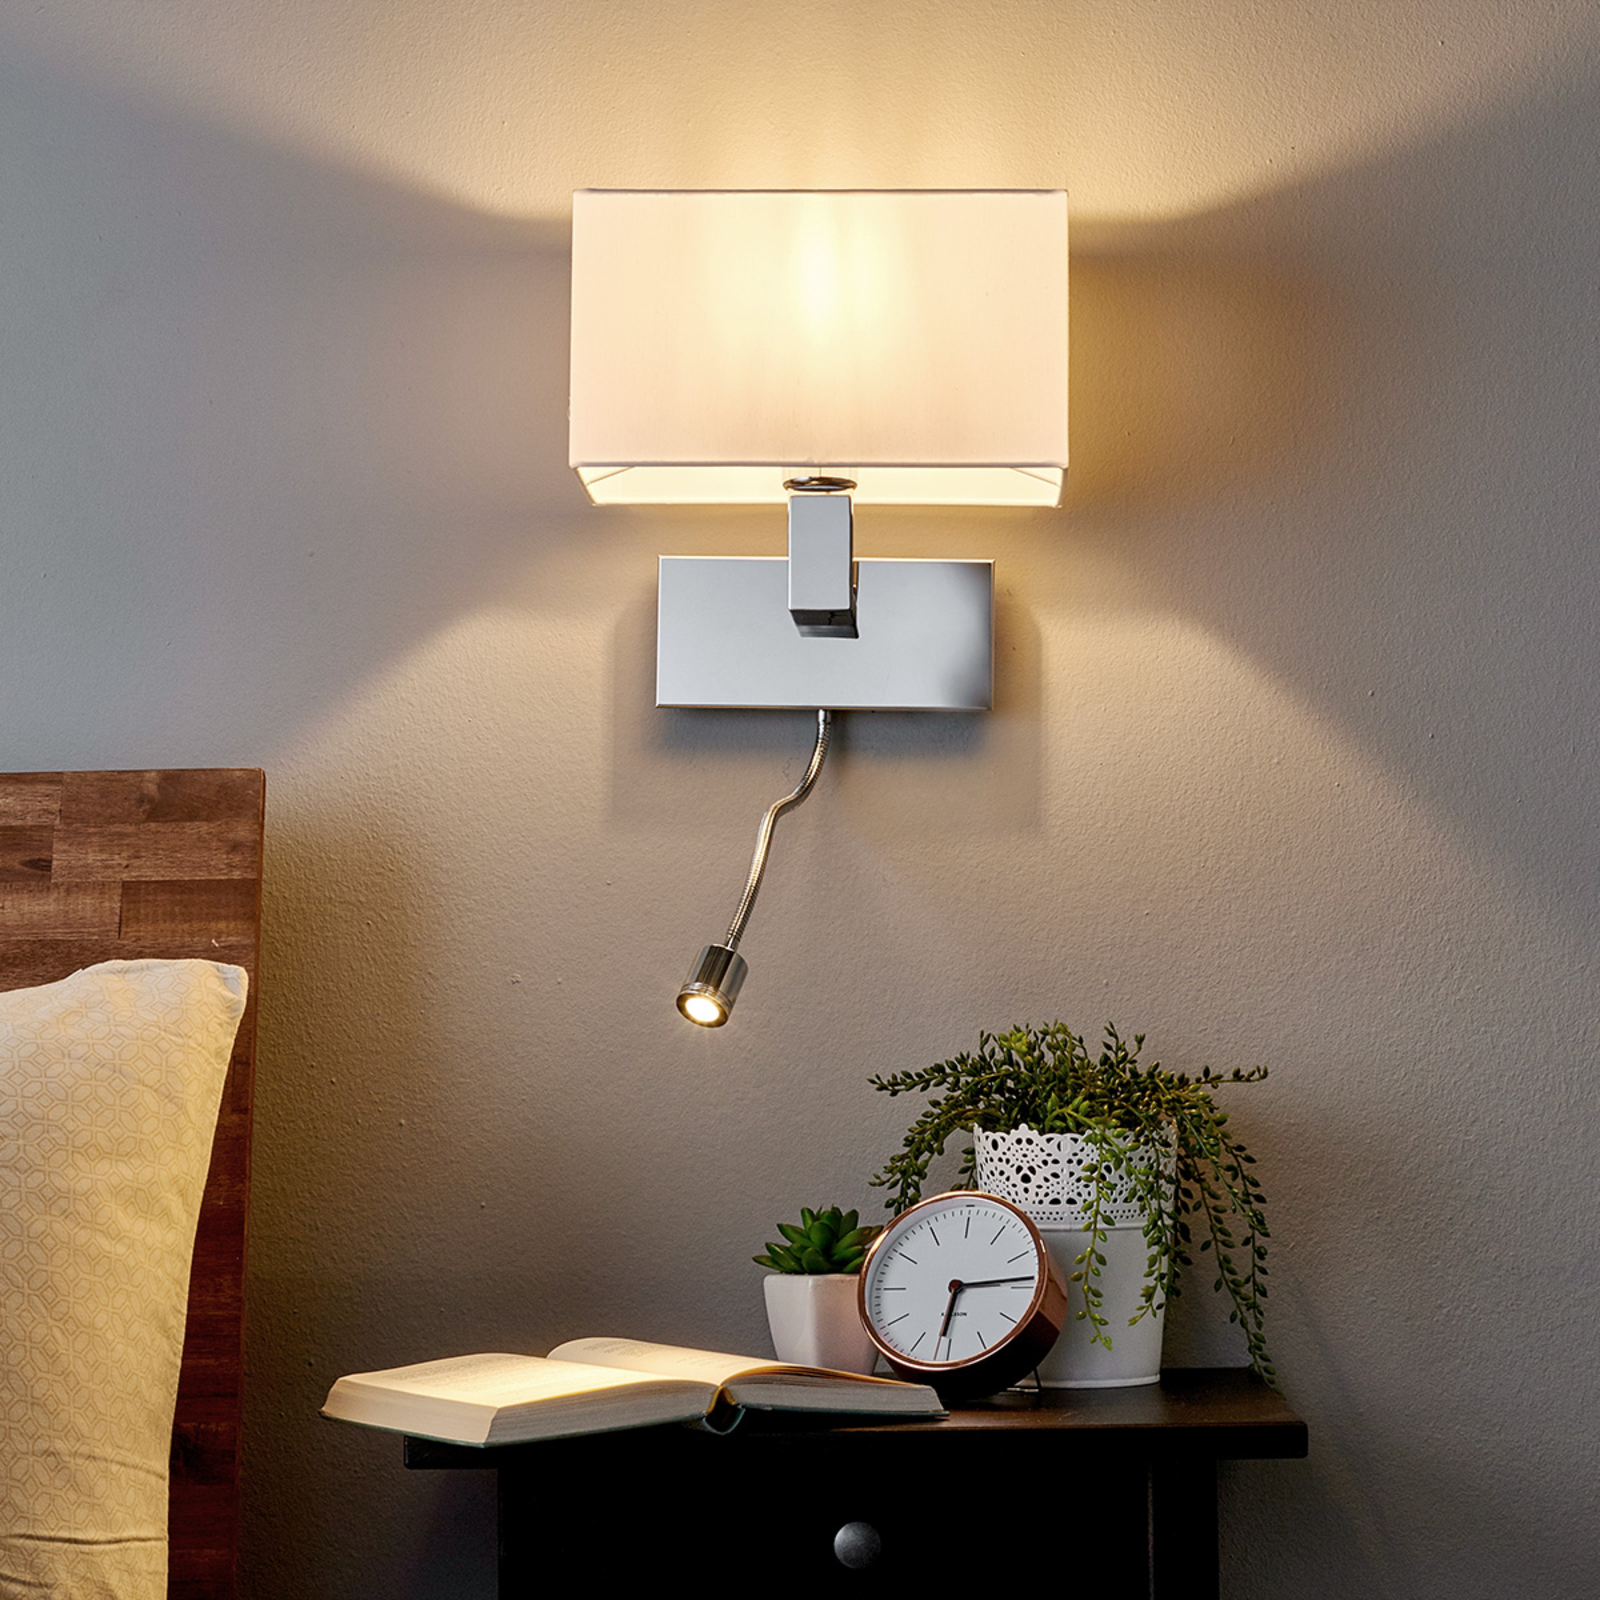 Lucande Tamara wall light, white, switch, LED flex arm